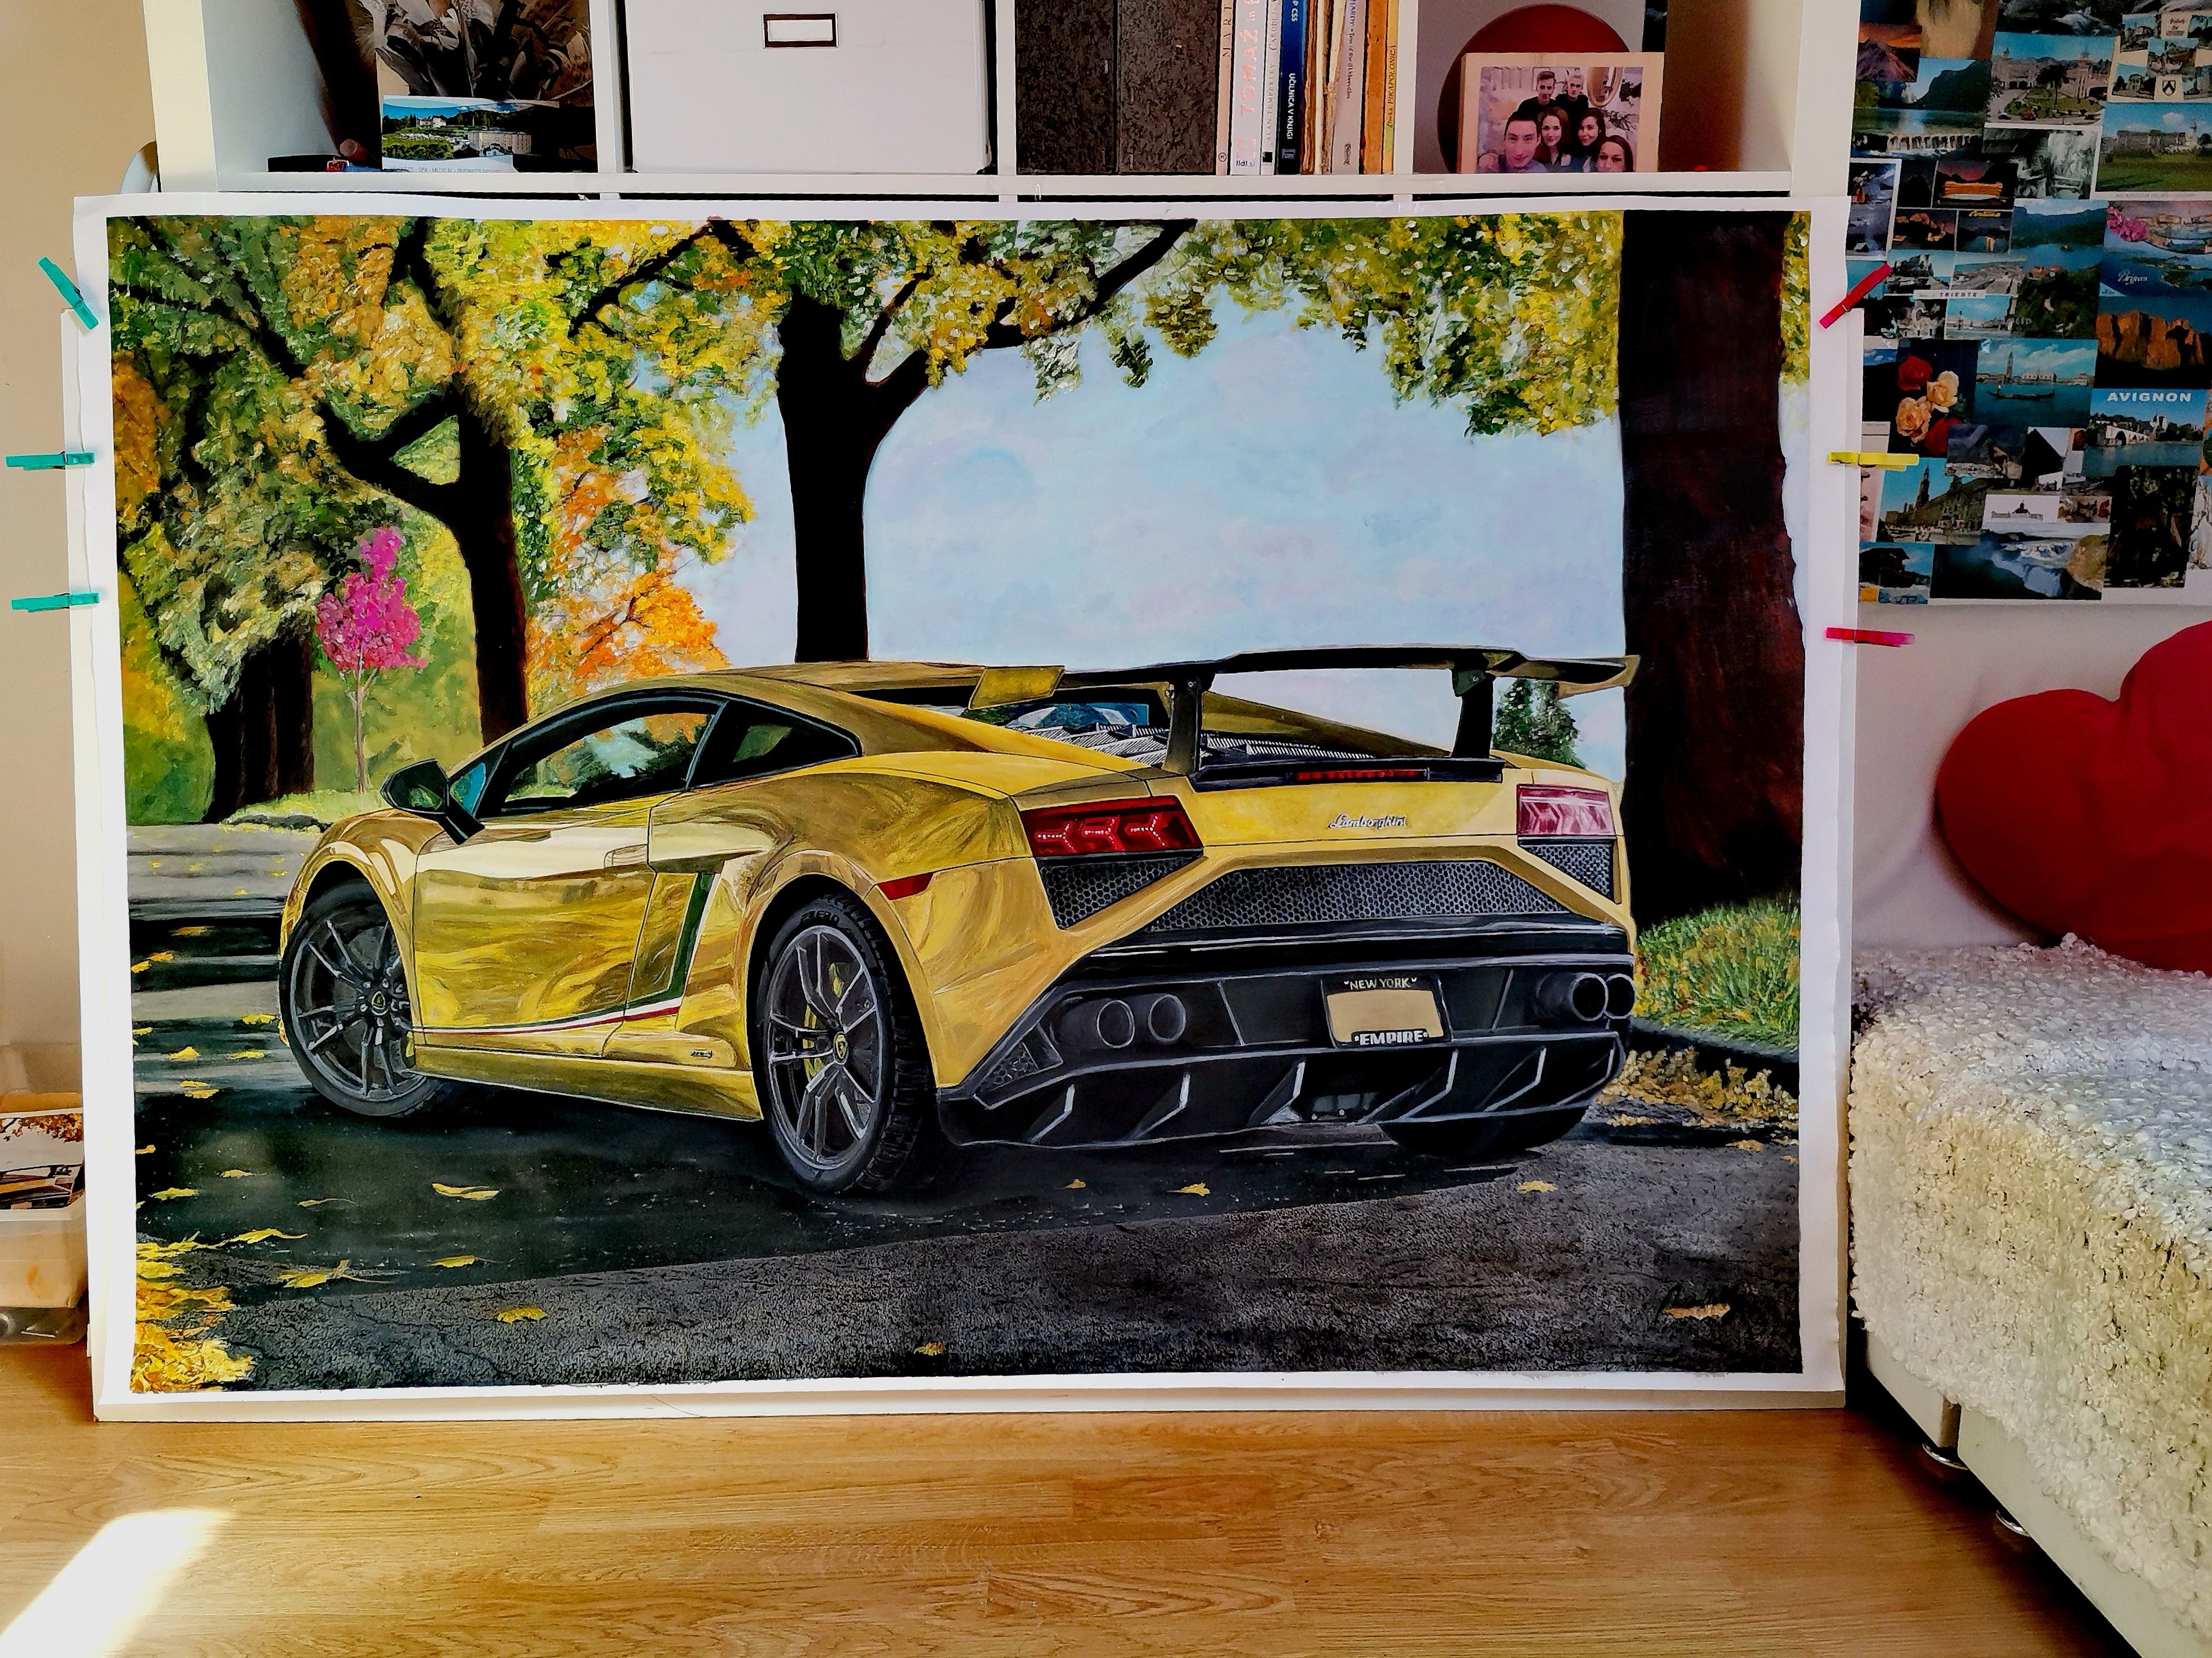 Lamborghini Gallardo Original Oil Painting on Canvas